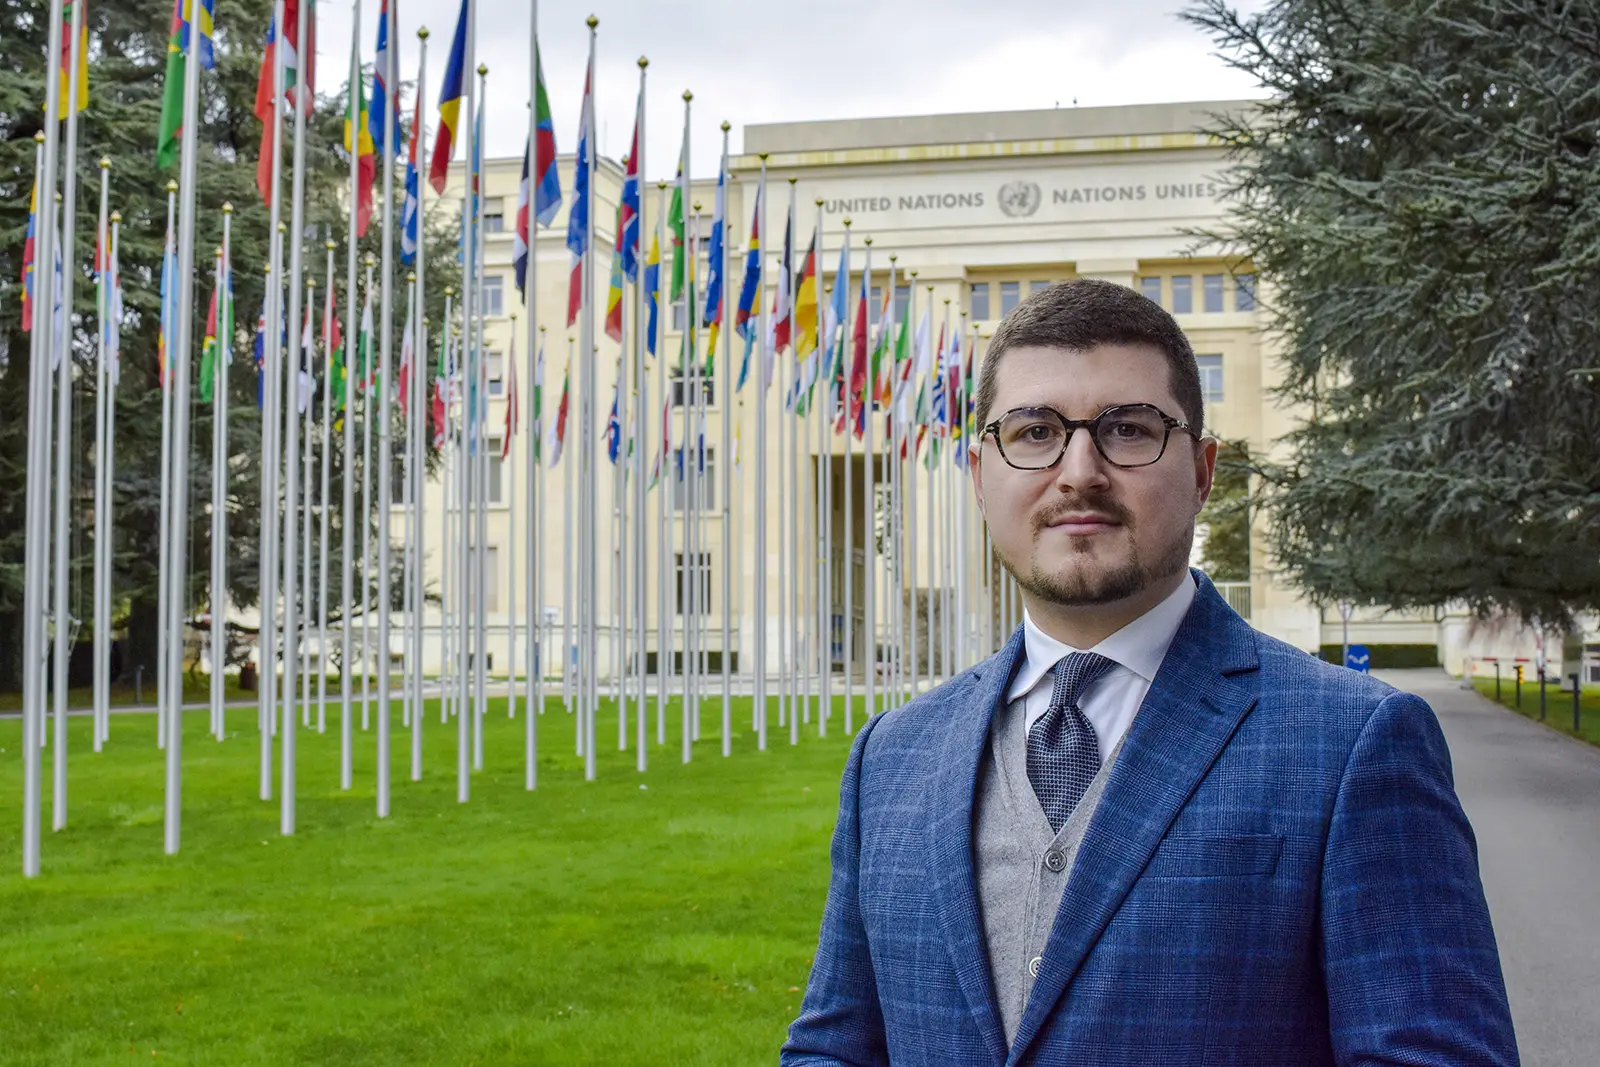 Giorgio Mazzoli in front of the UN in Geneva. The WHO pandemic treaty is negotiated by UN member states.